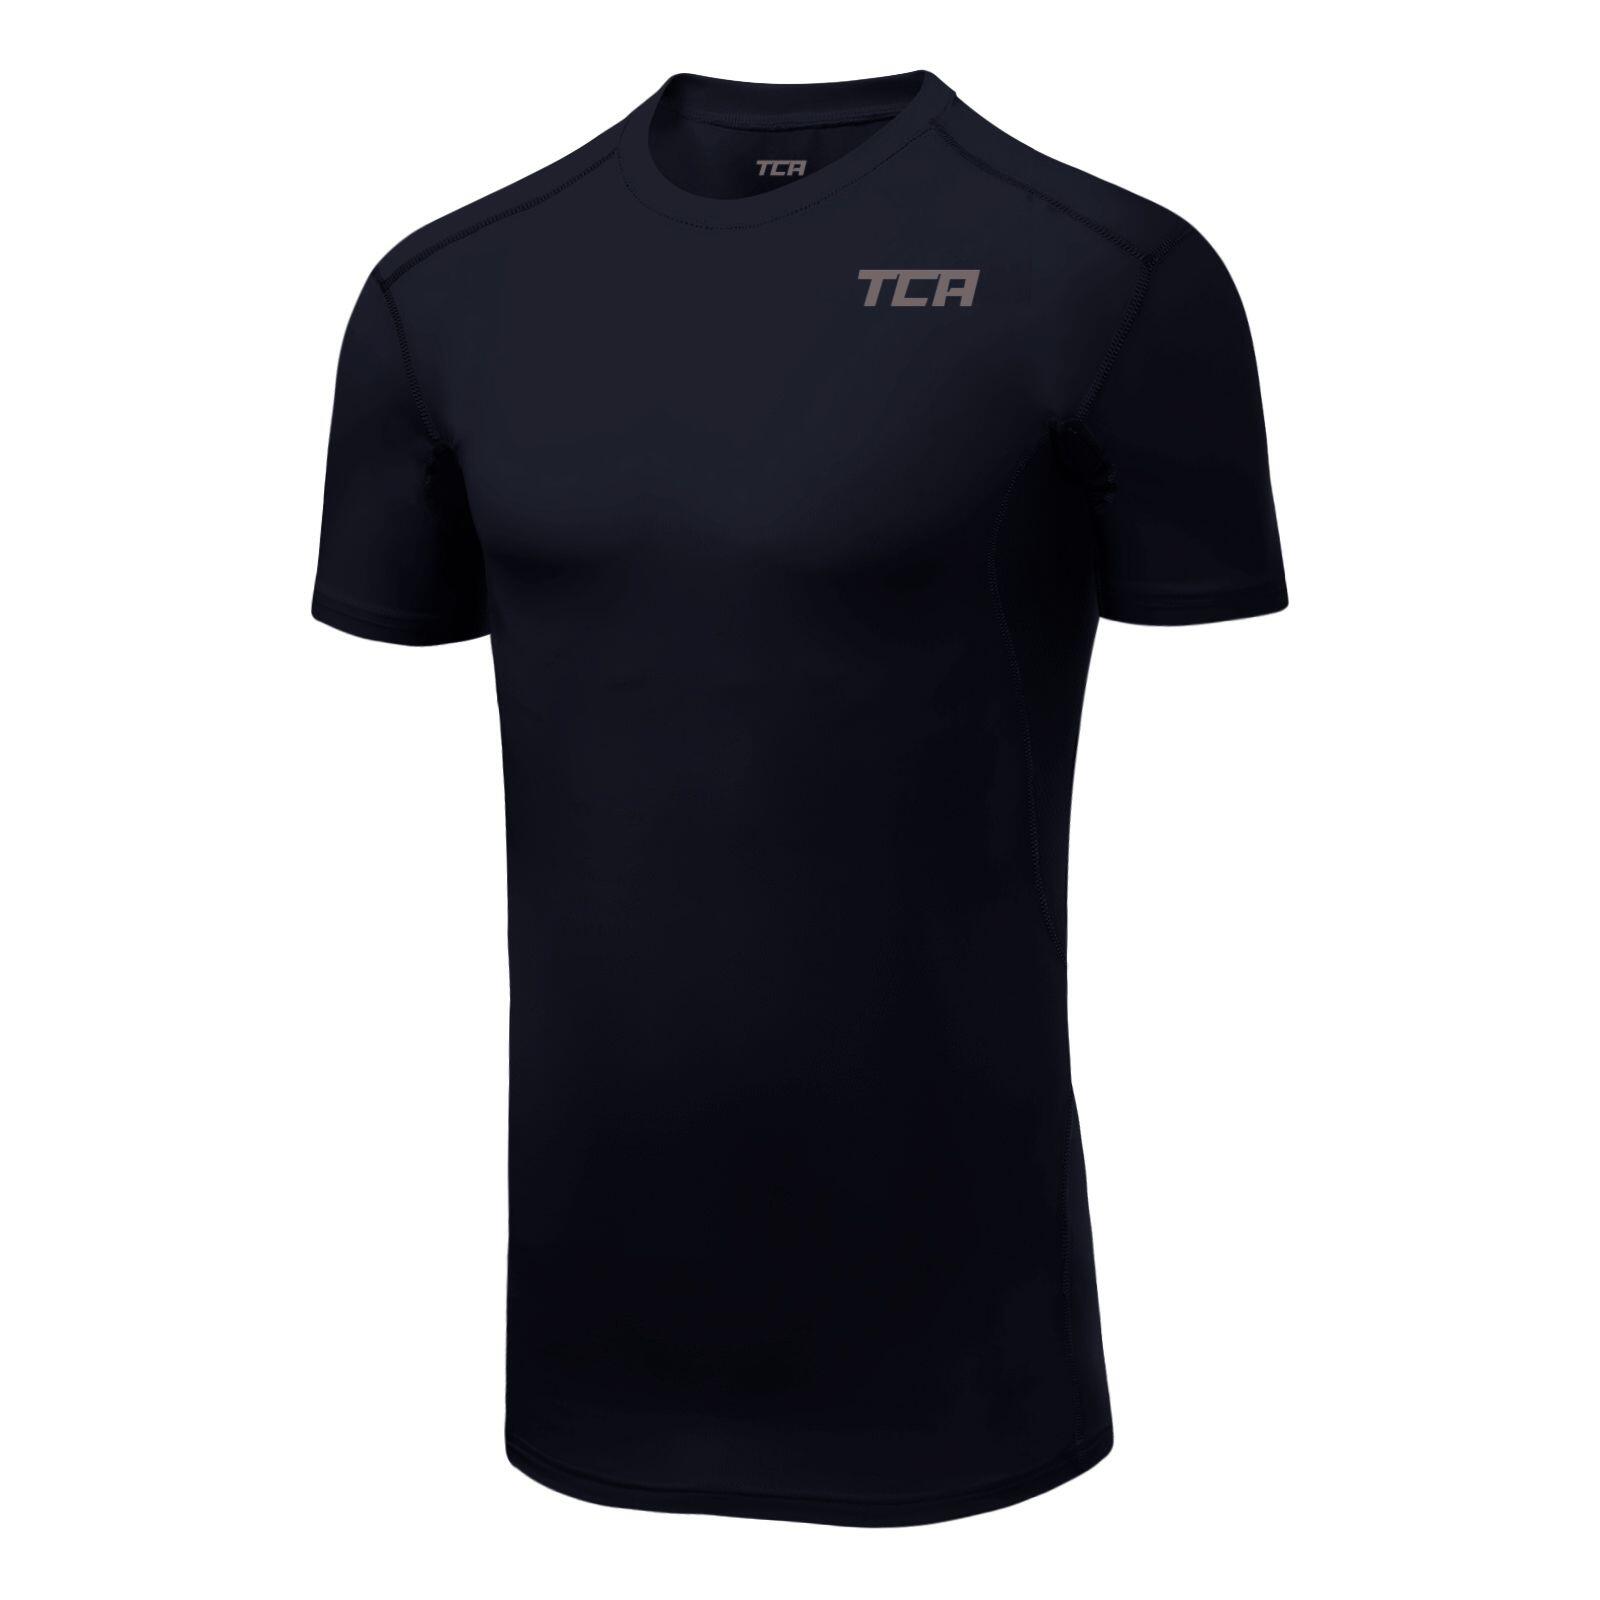 TCA Boys' HyperFusion Breathable Base Layer Compression T-shirt - Navy Blazer